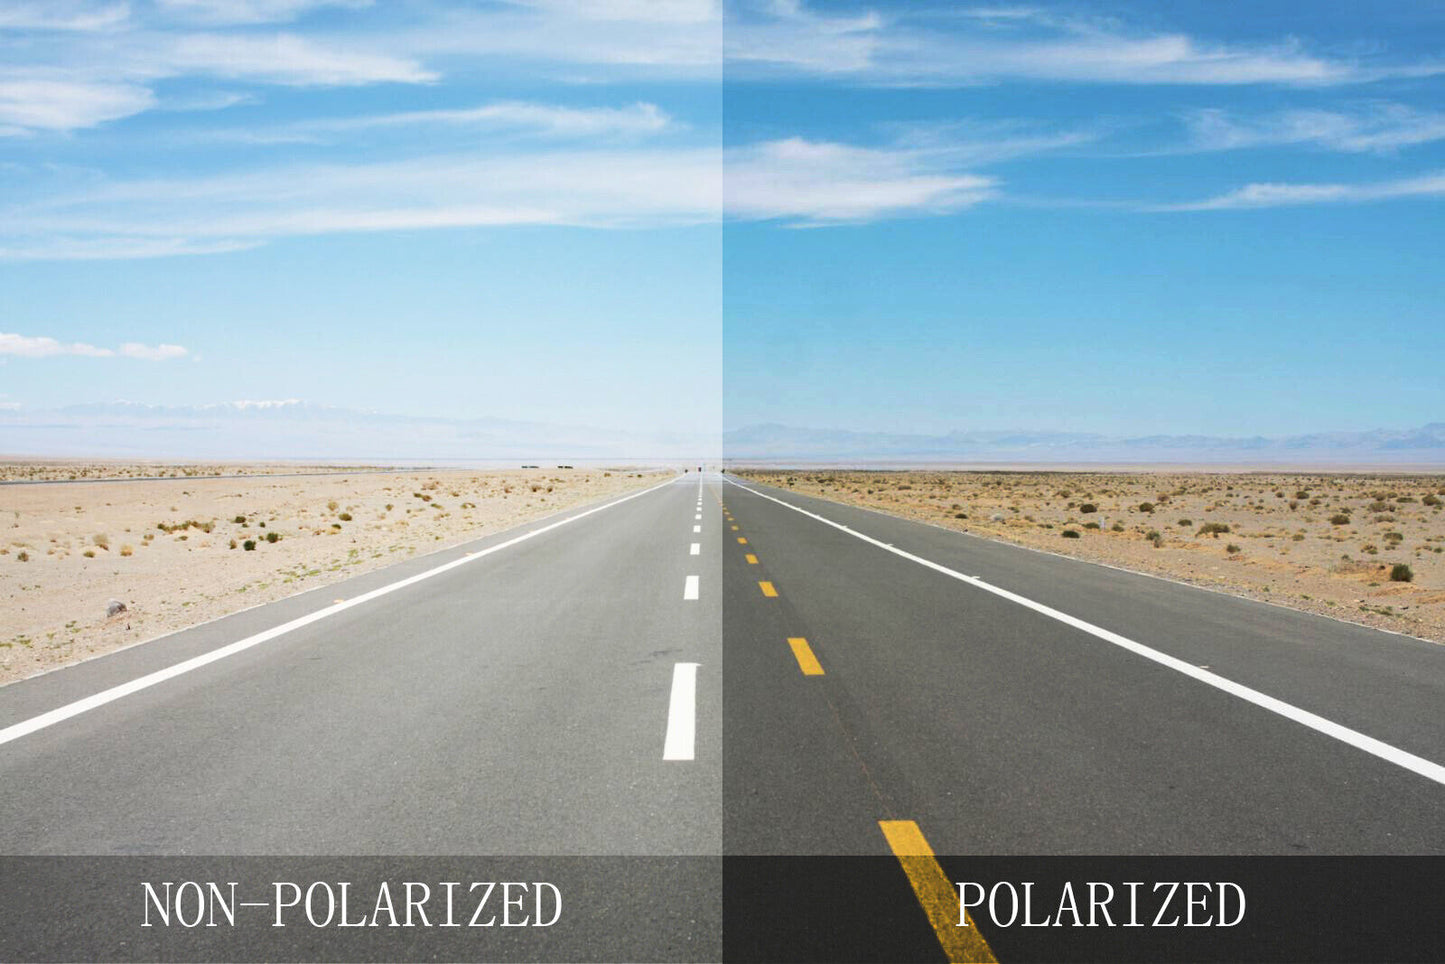 US Replacement Polarized Lenses for-Oakley Flak Beta Sunglasses Anti-Scratch